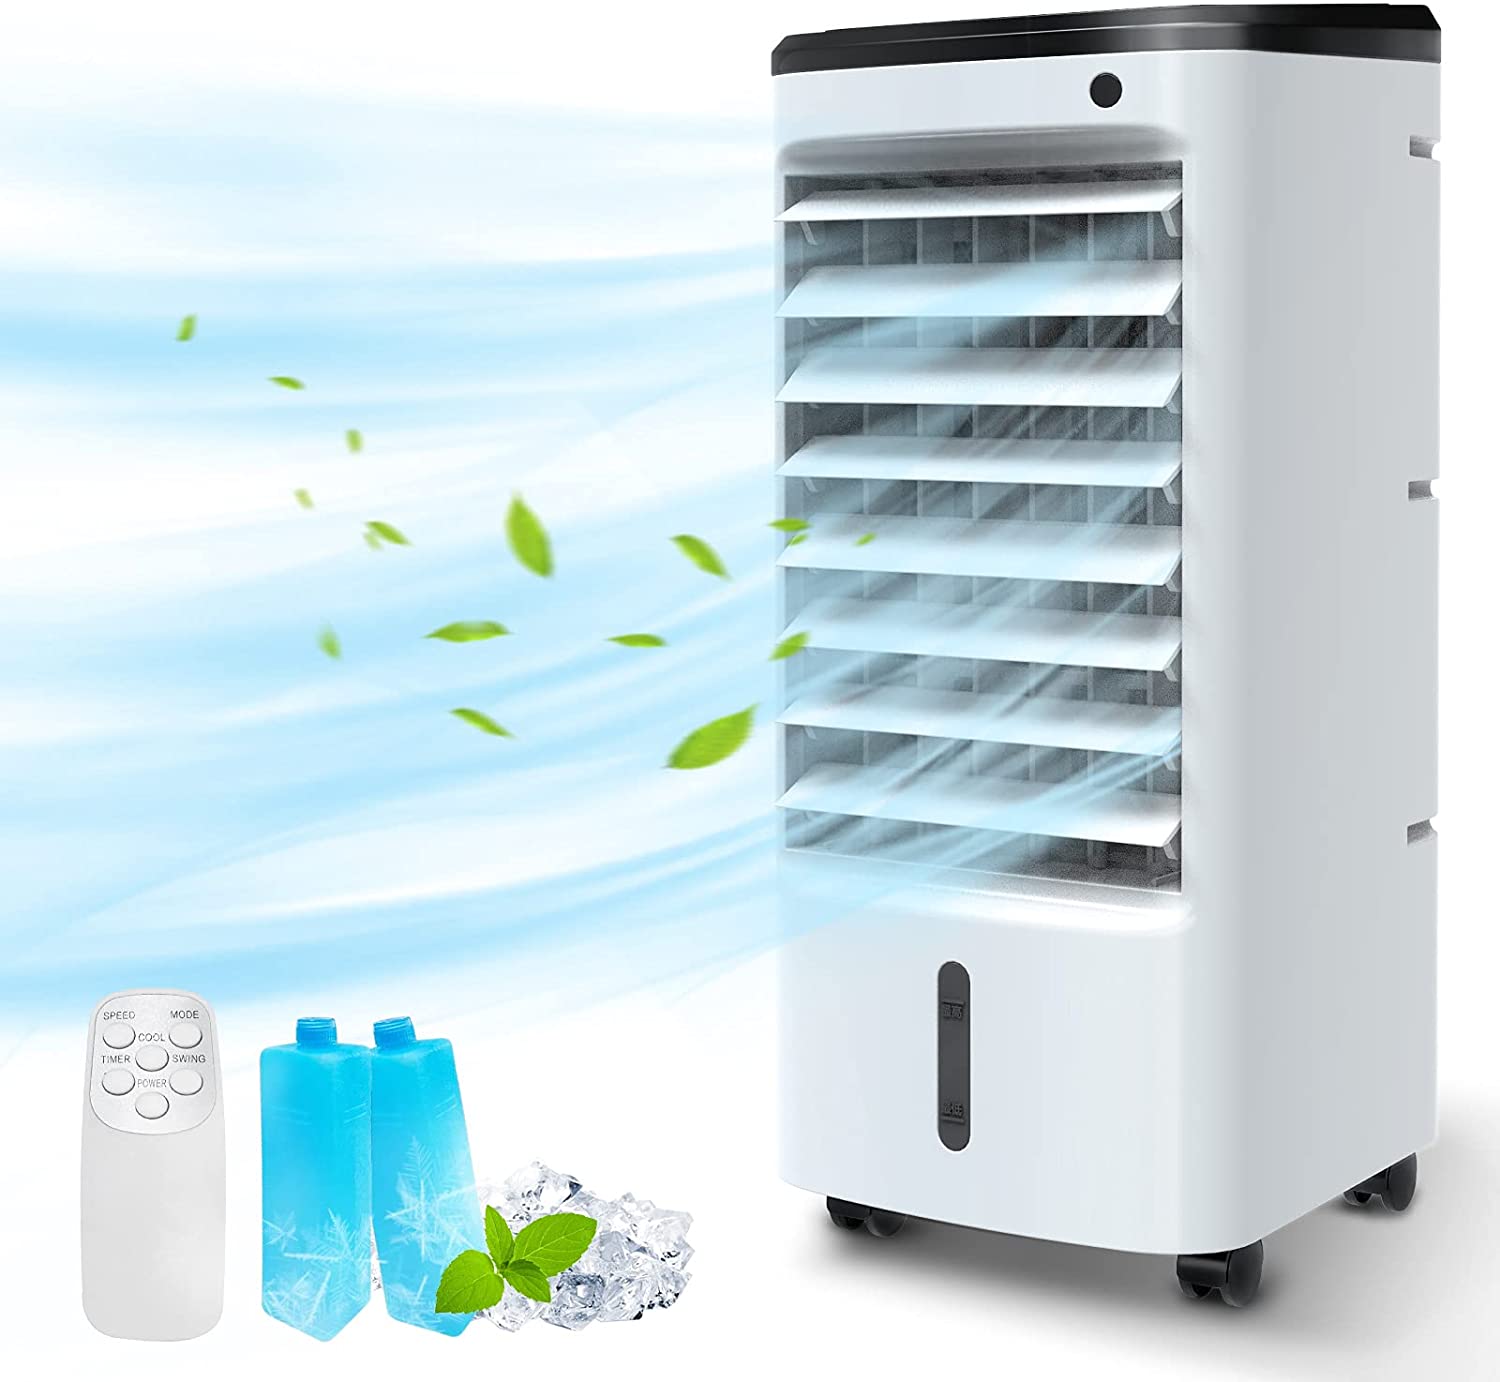 Breezewell Evaporative Cooler